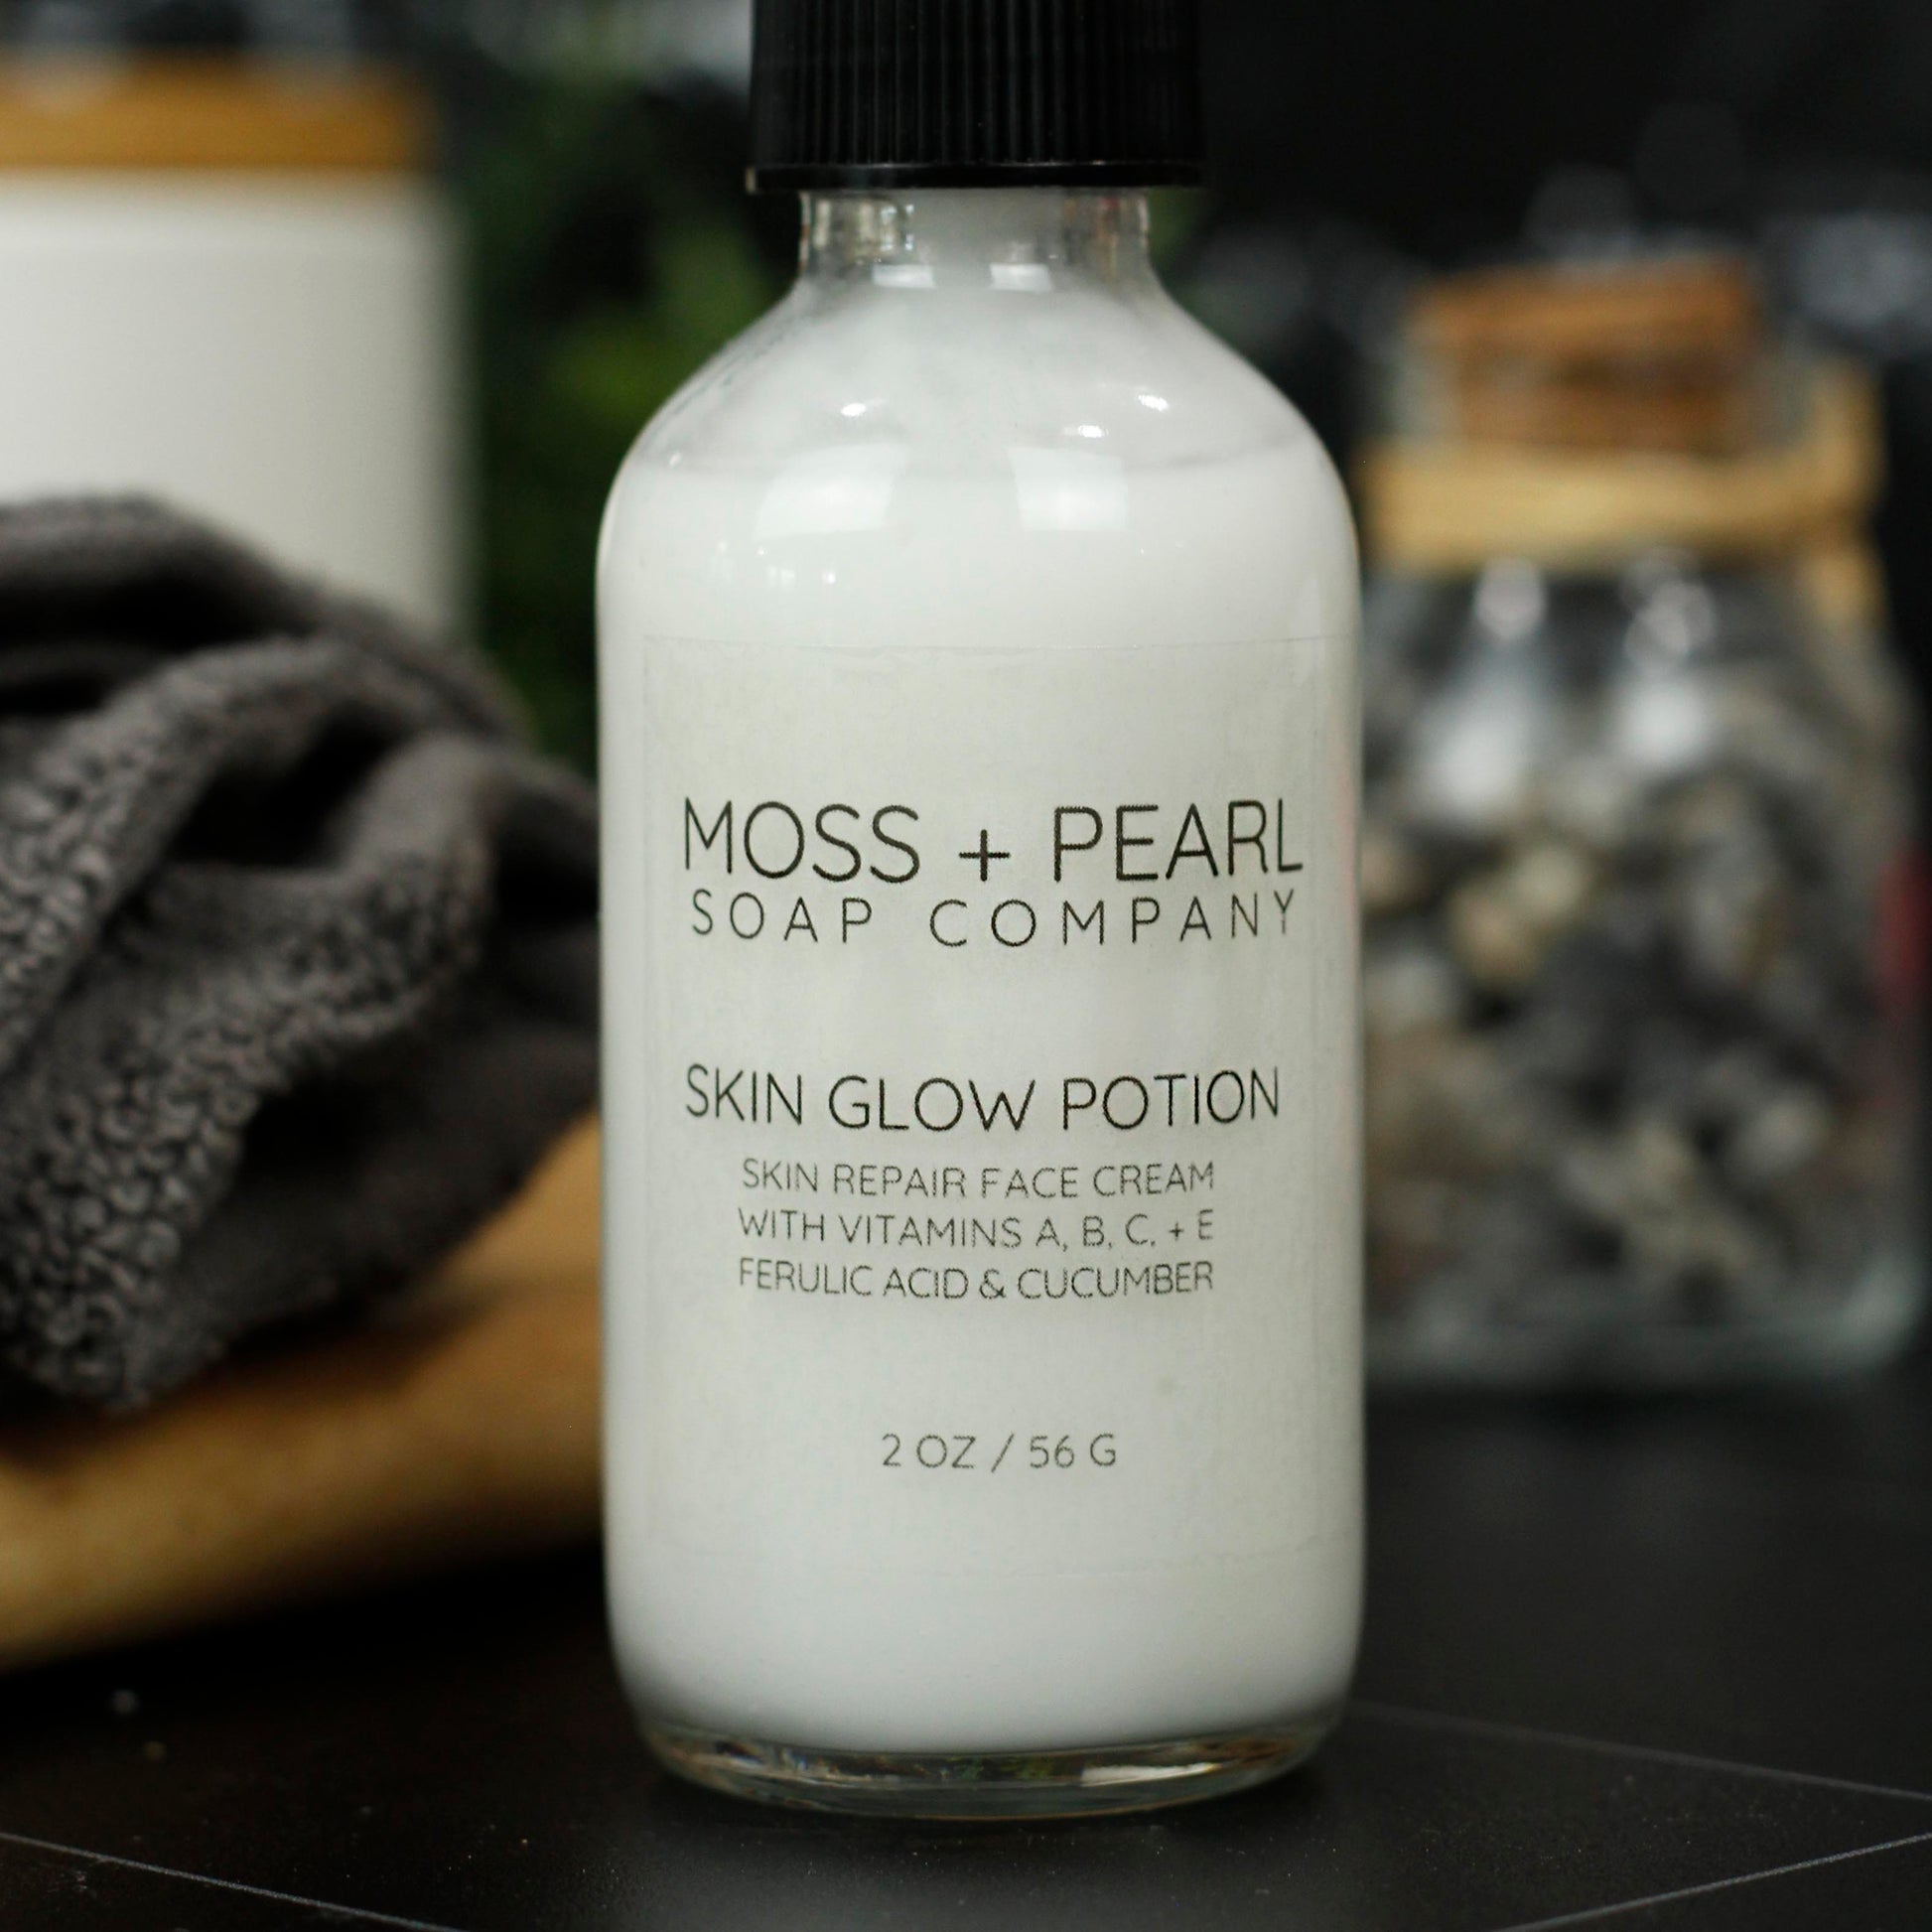 SKIN GLOW POTION Moss + Pearl Soap Company